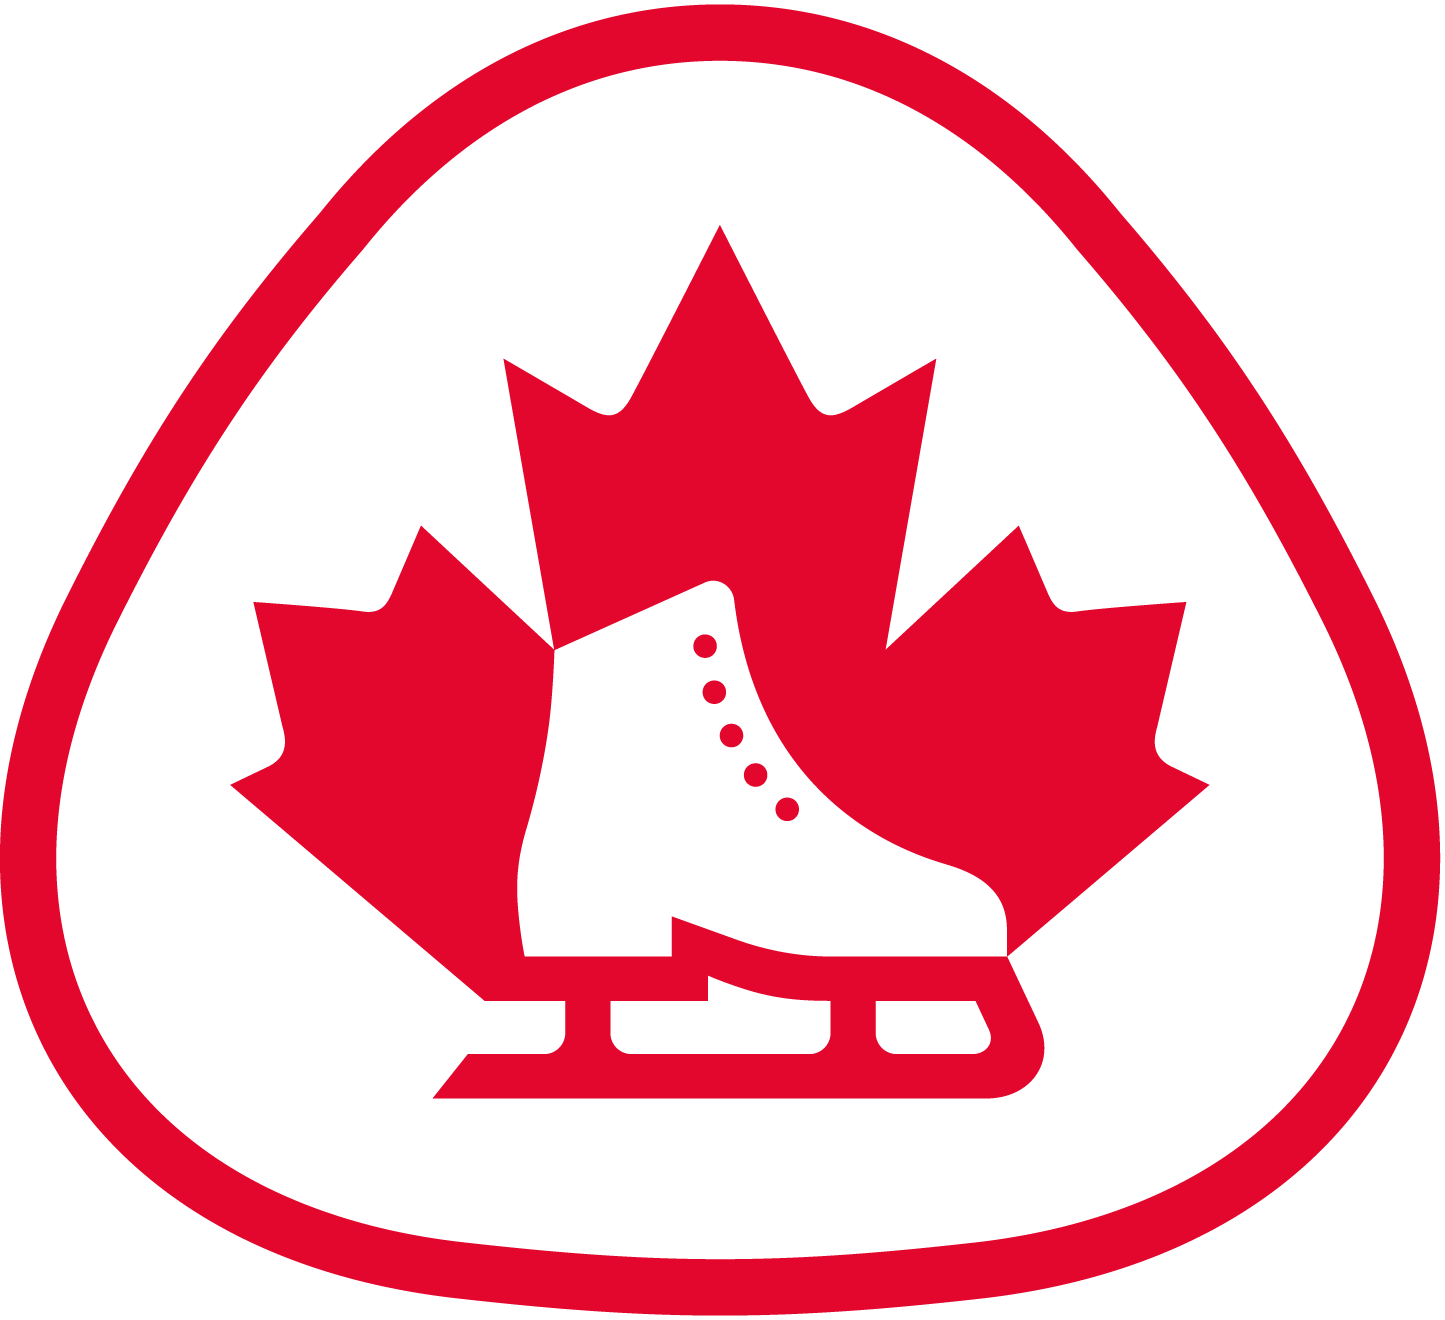 Skate Canada logo